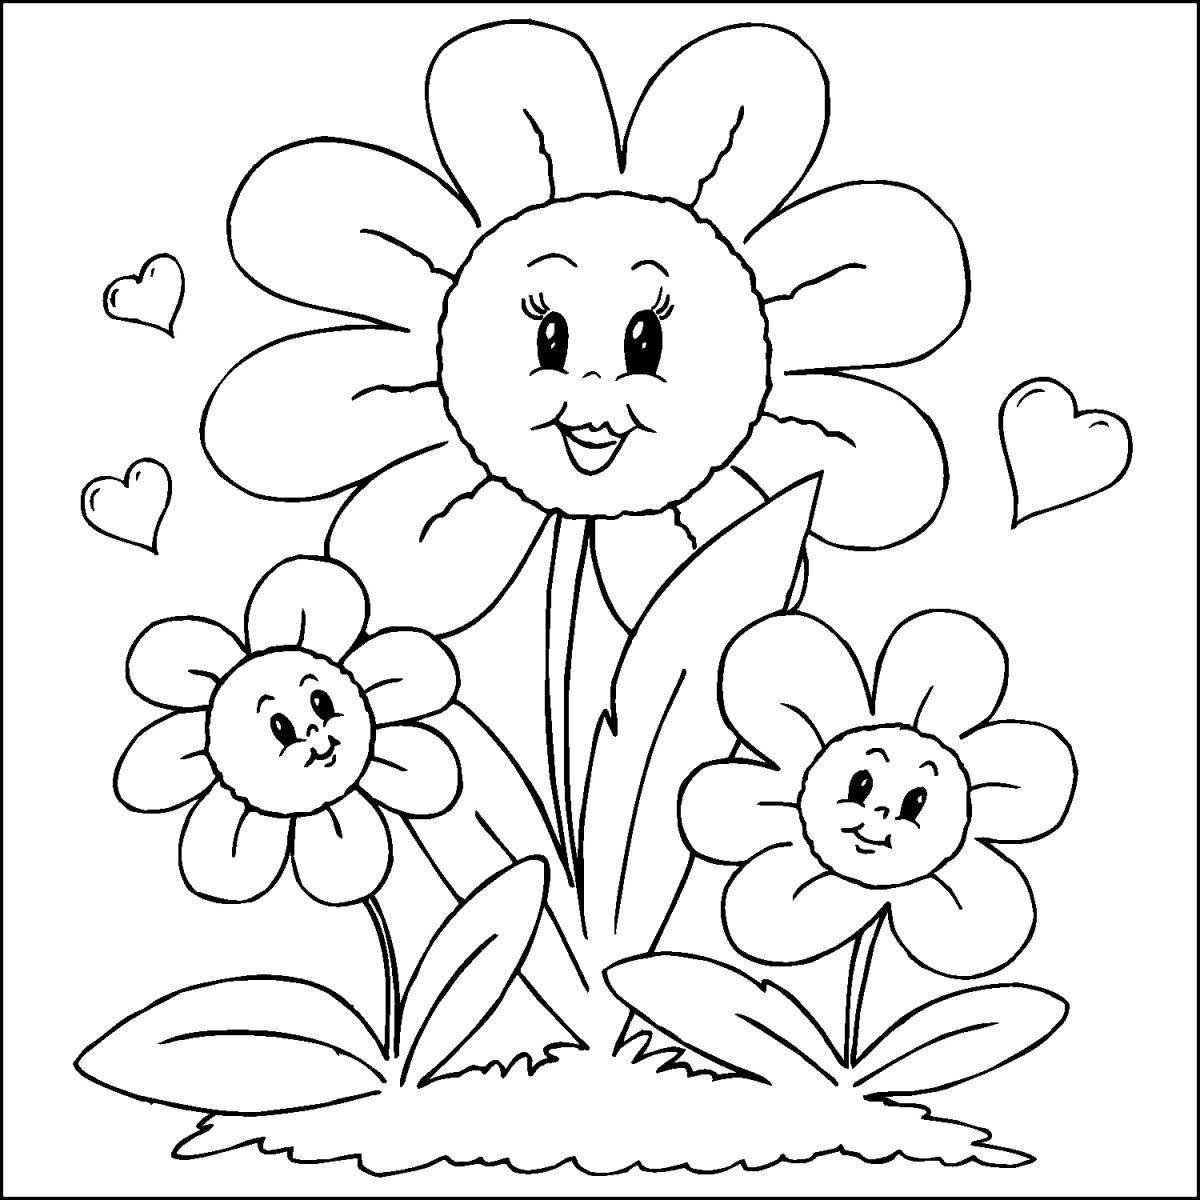 Забавная раскраска цветок для детей 5-6 лет